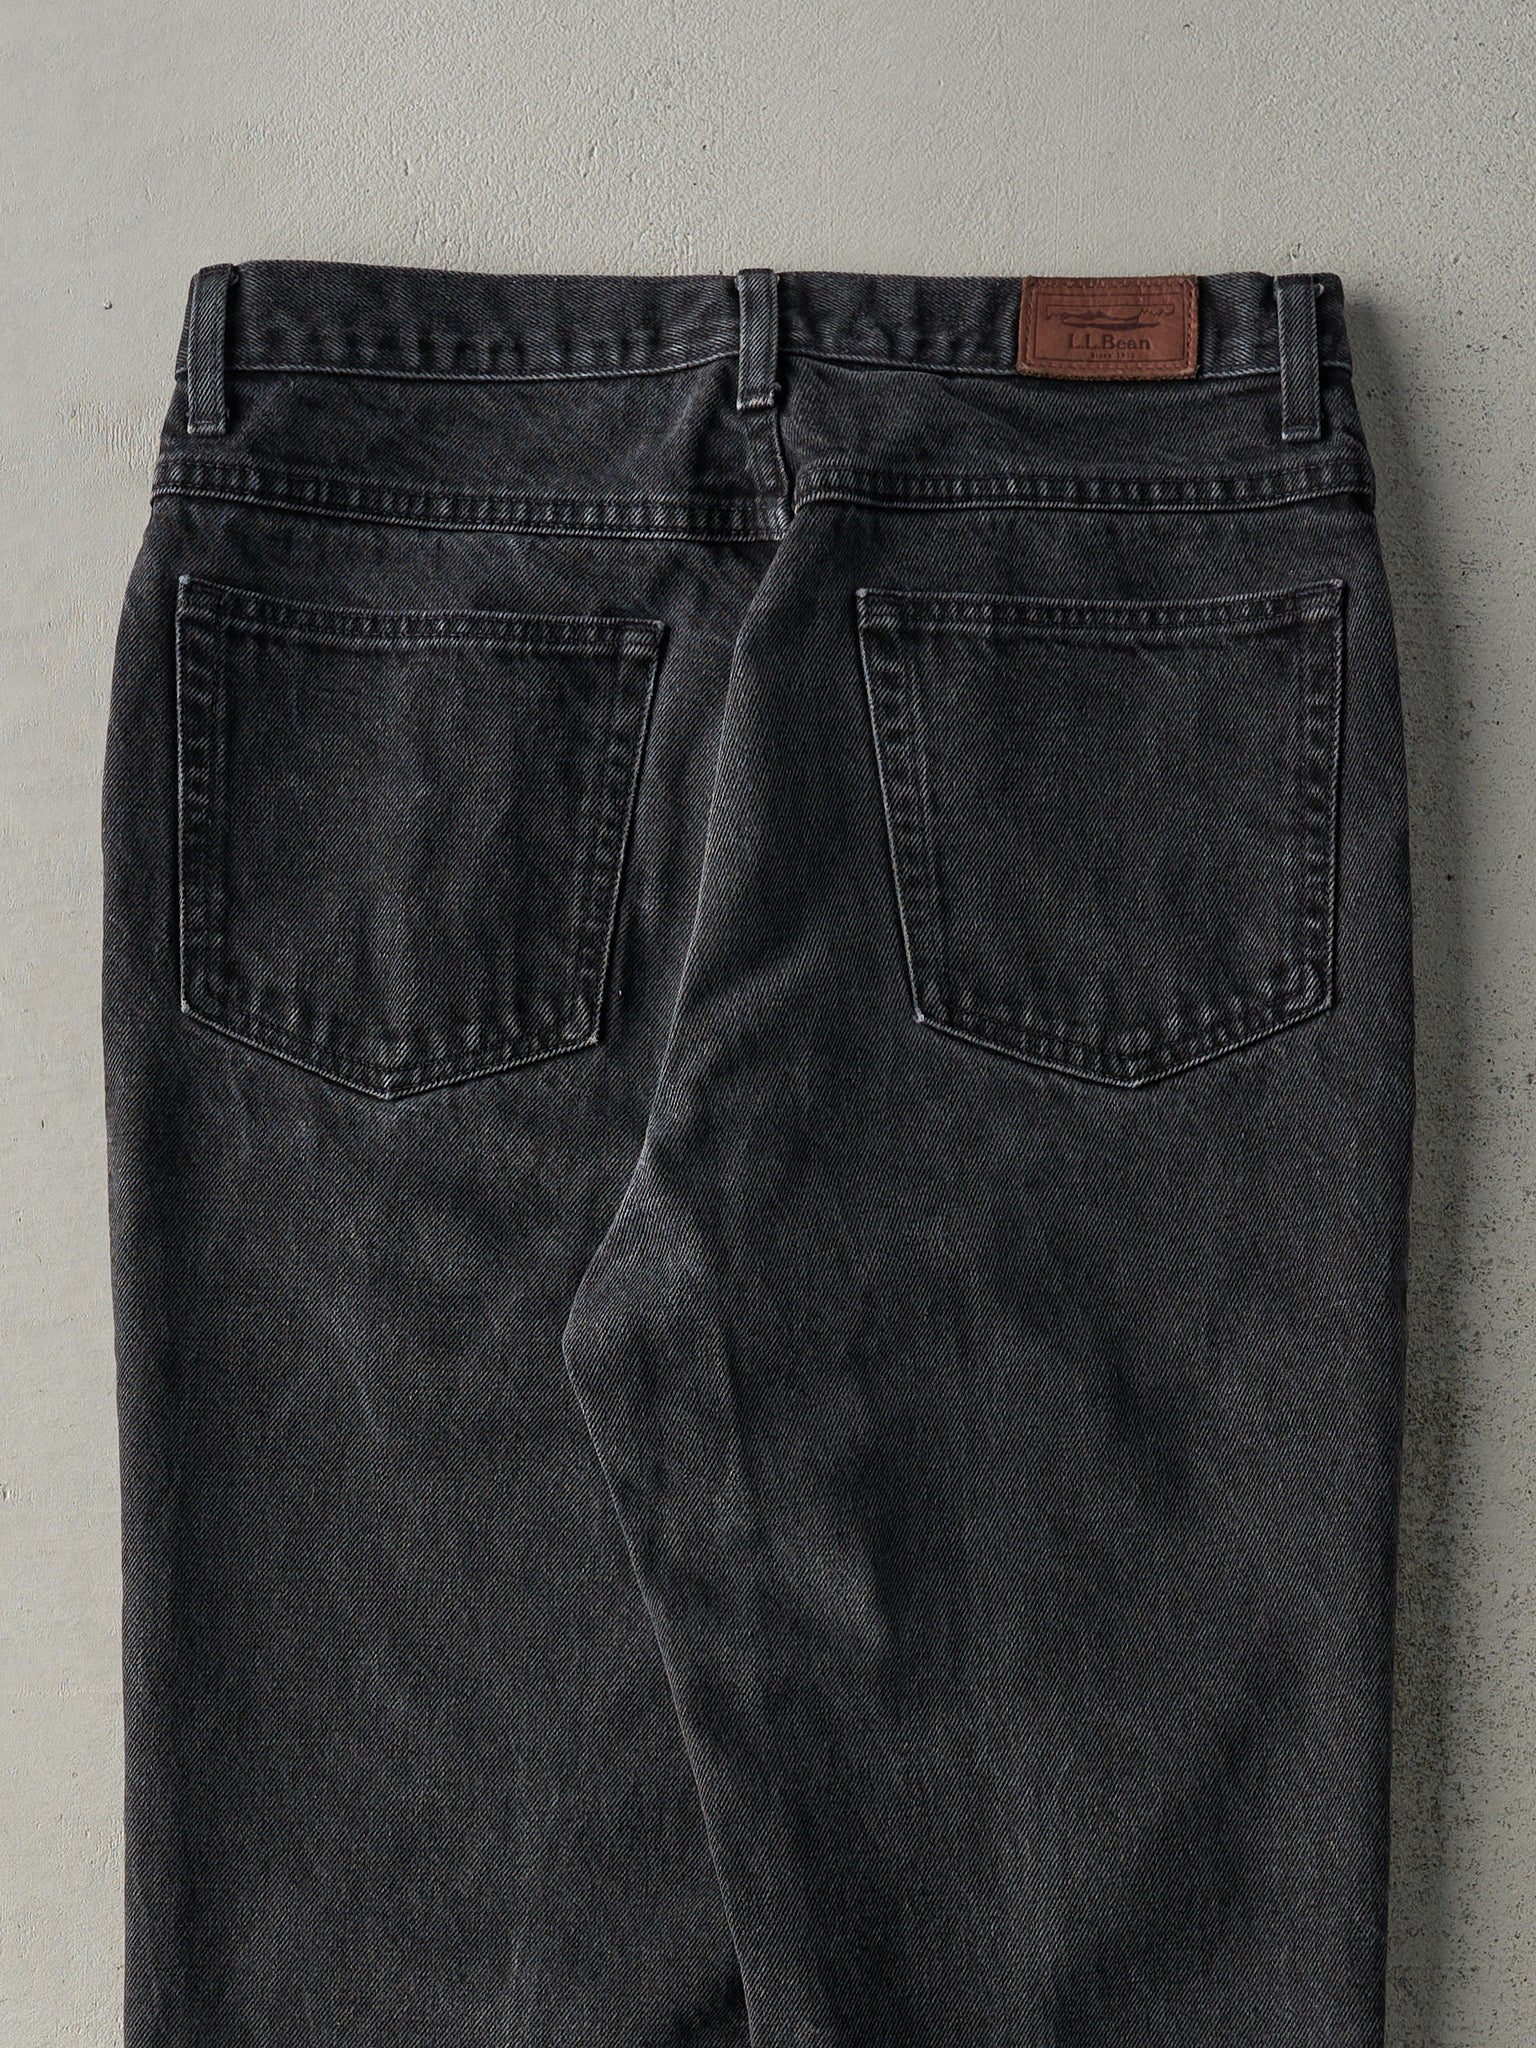 Vintage 90s Faded Black LL Bean Classic Fit Denim Pants (31x29)